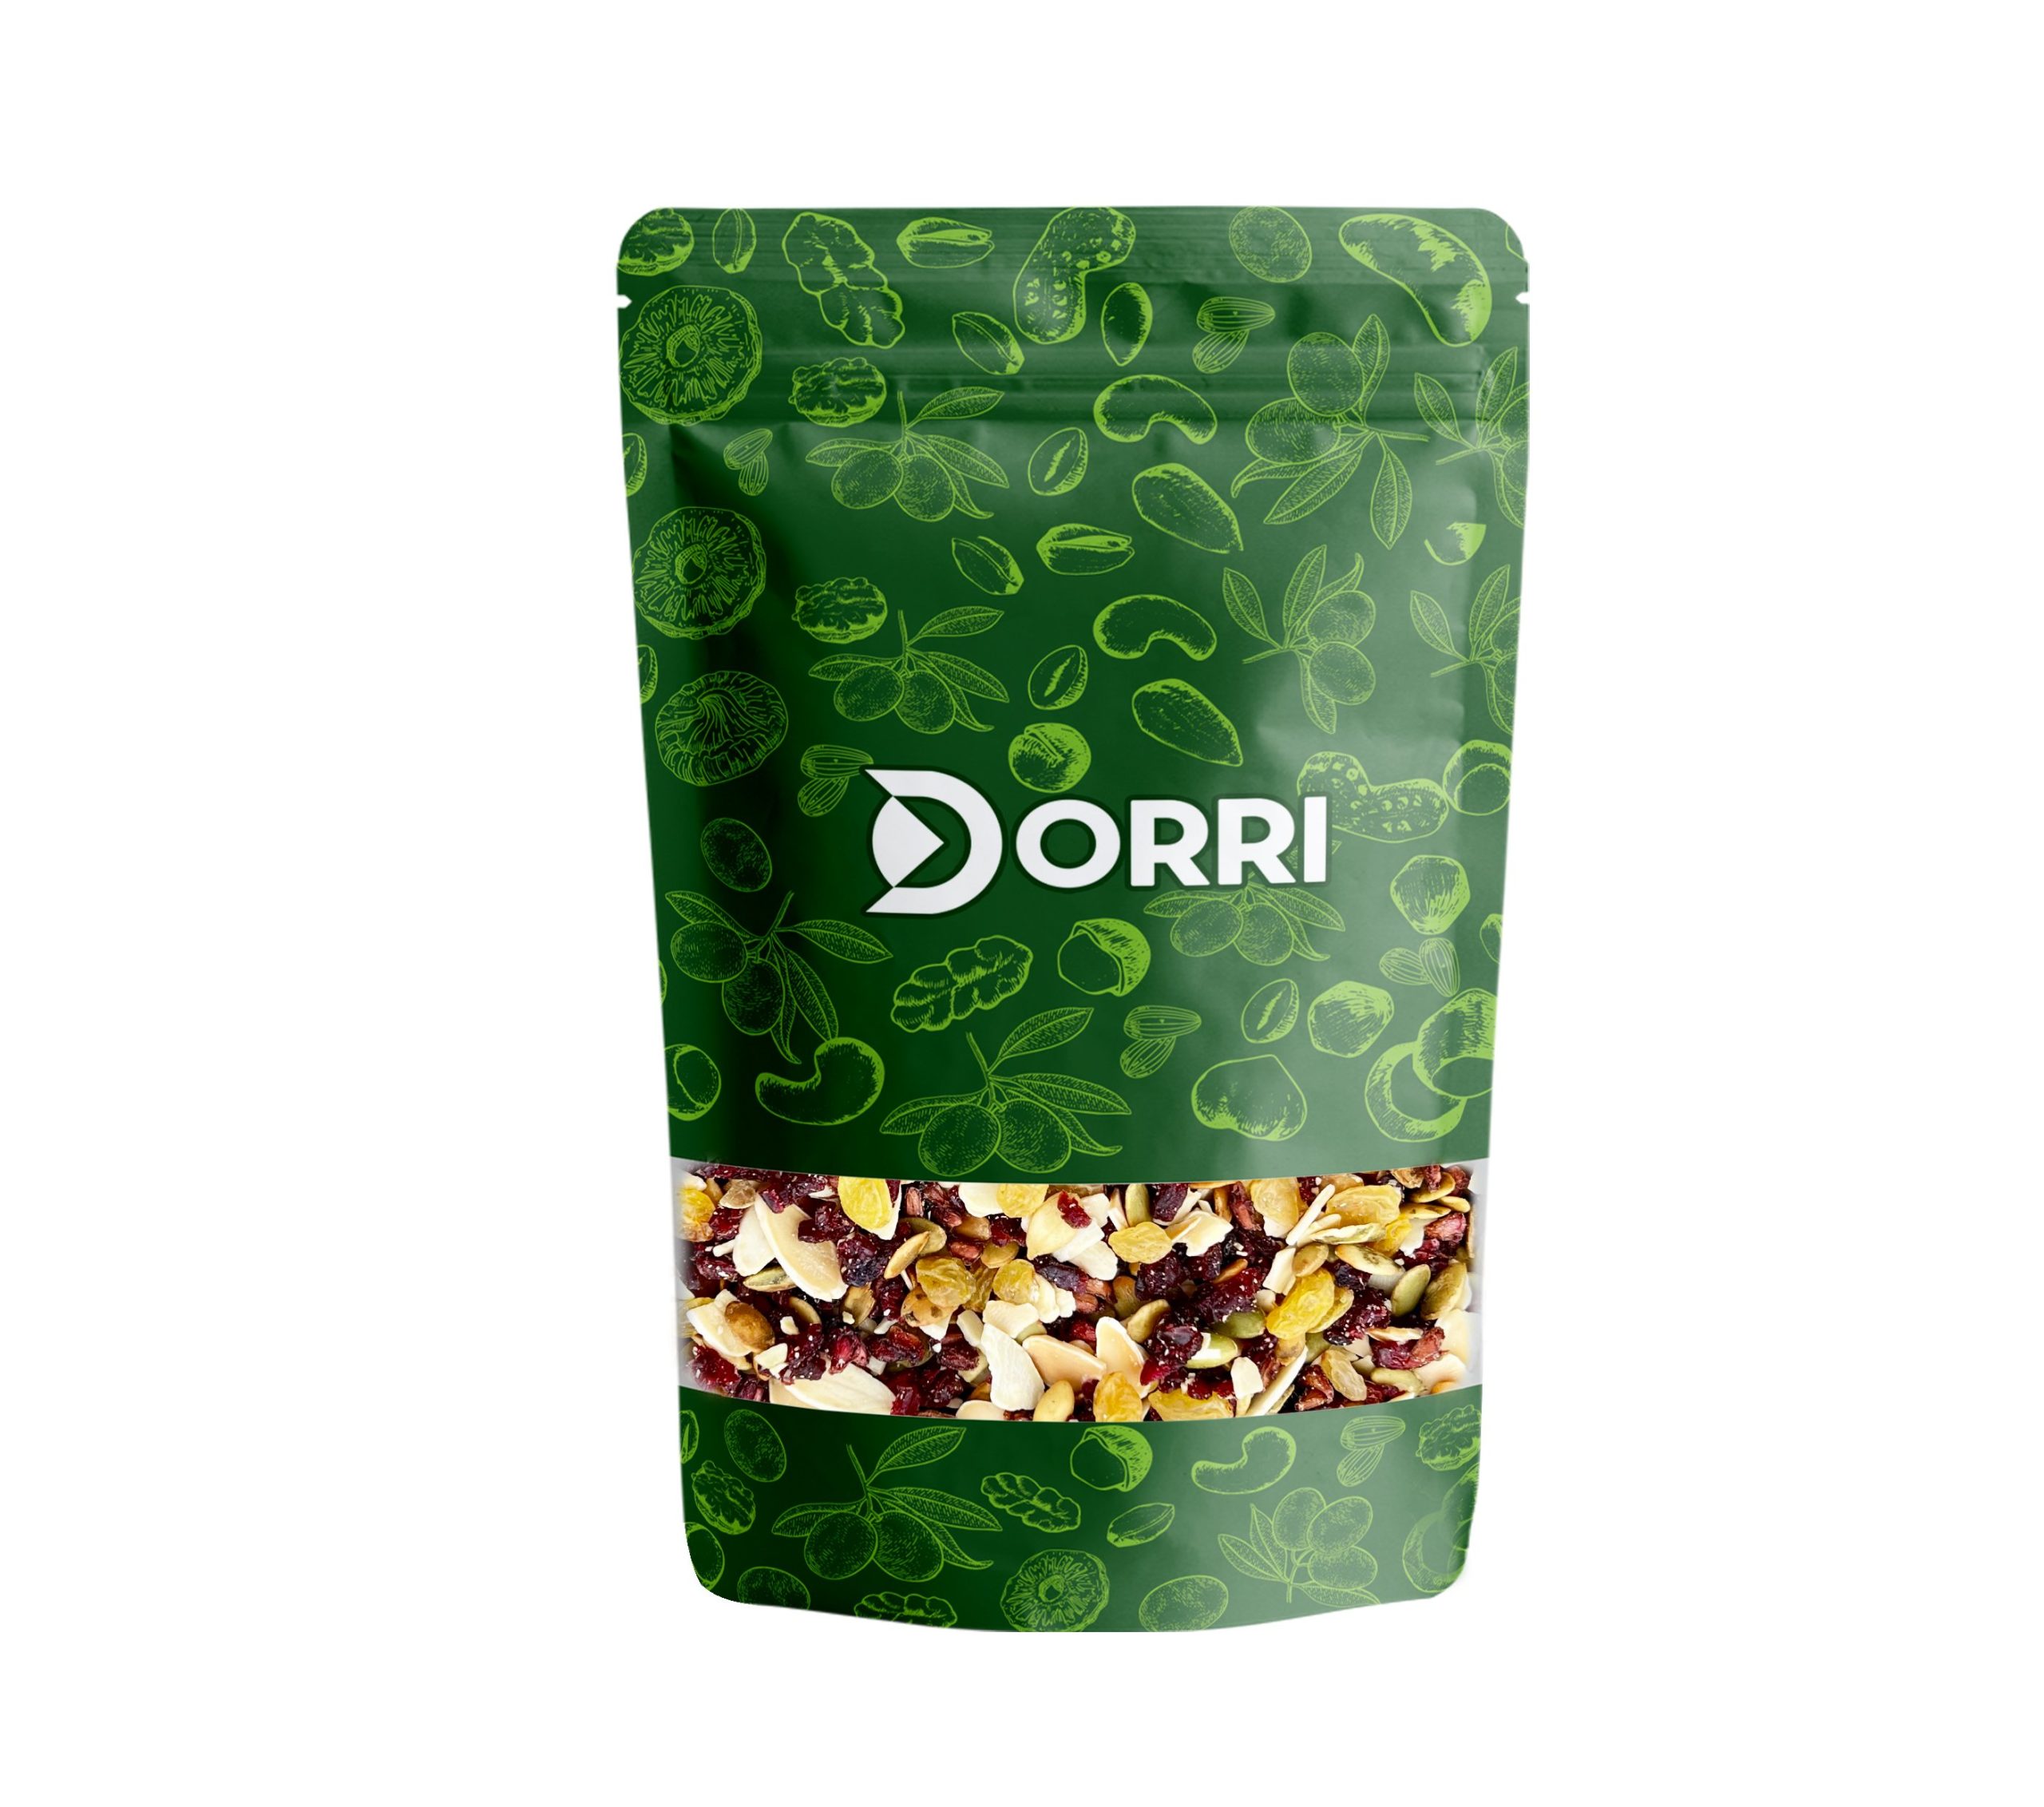 Dorri - Forest mix